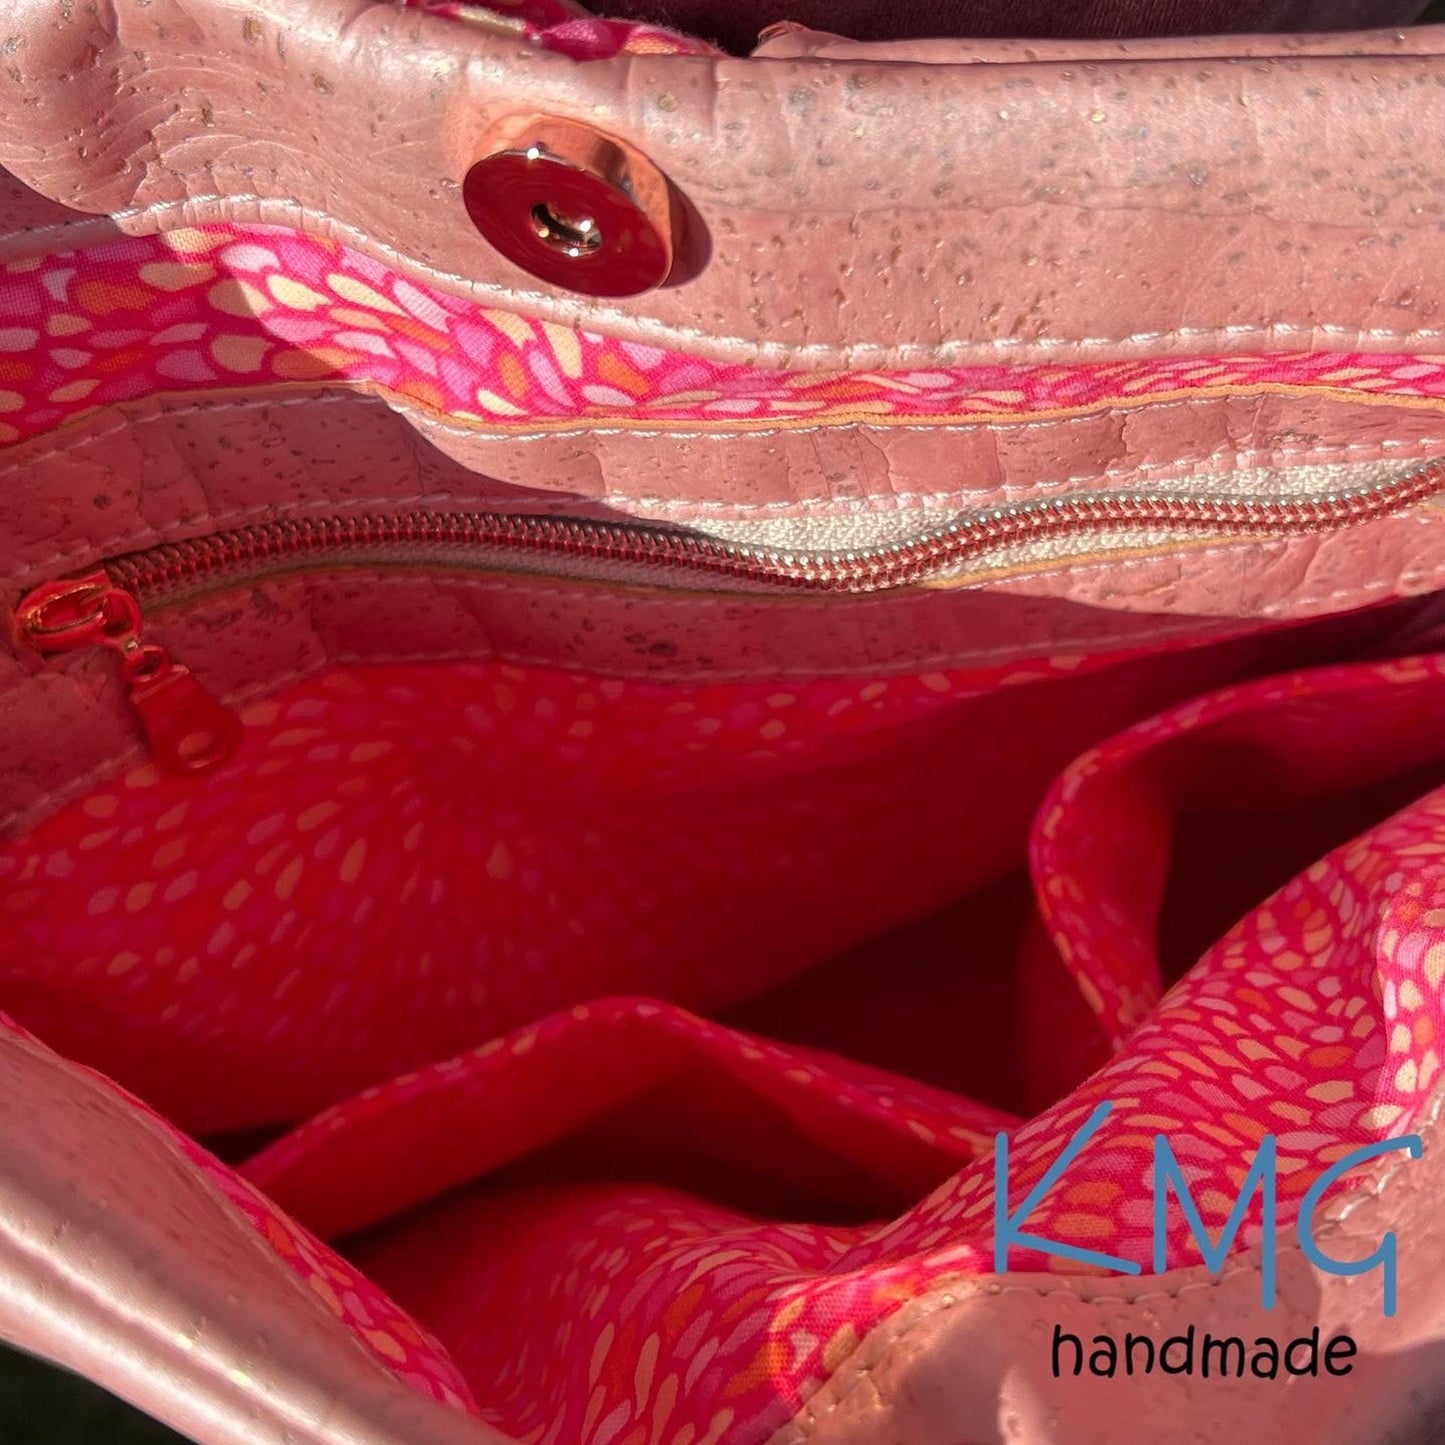 KMGhandmade Original Compass Crossbody Bag - Pink Natural Cork